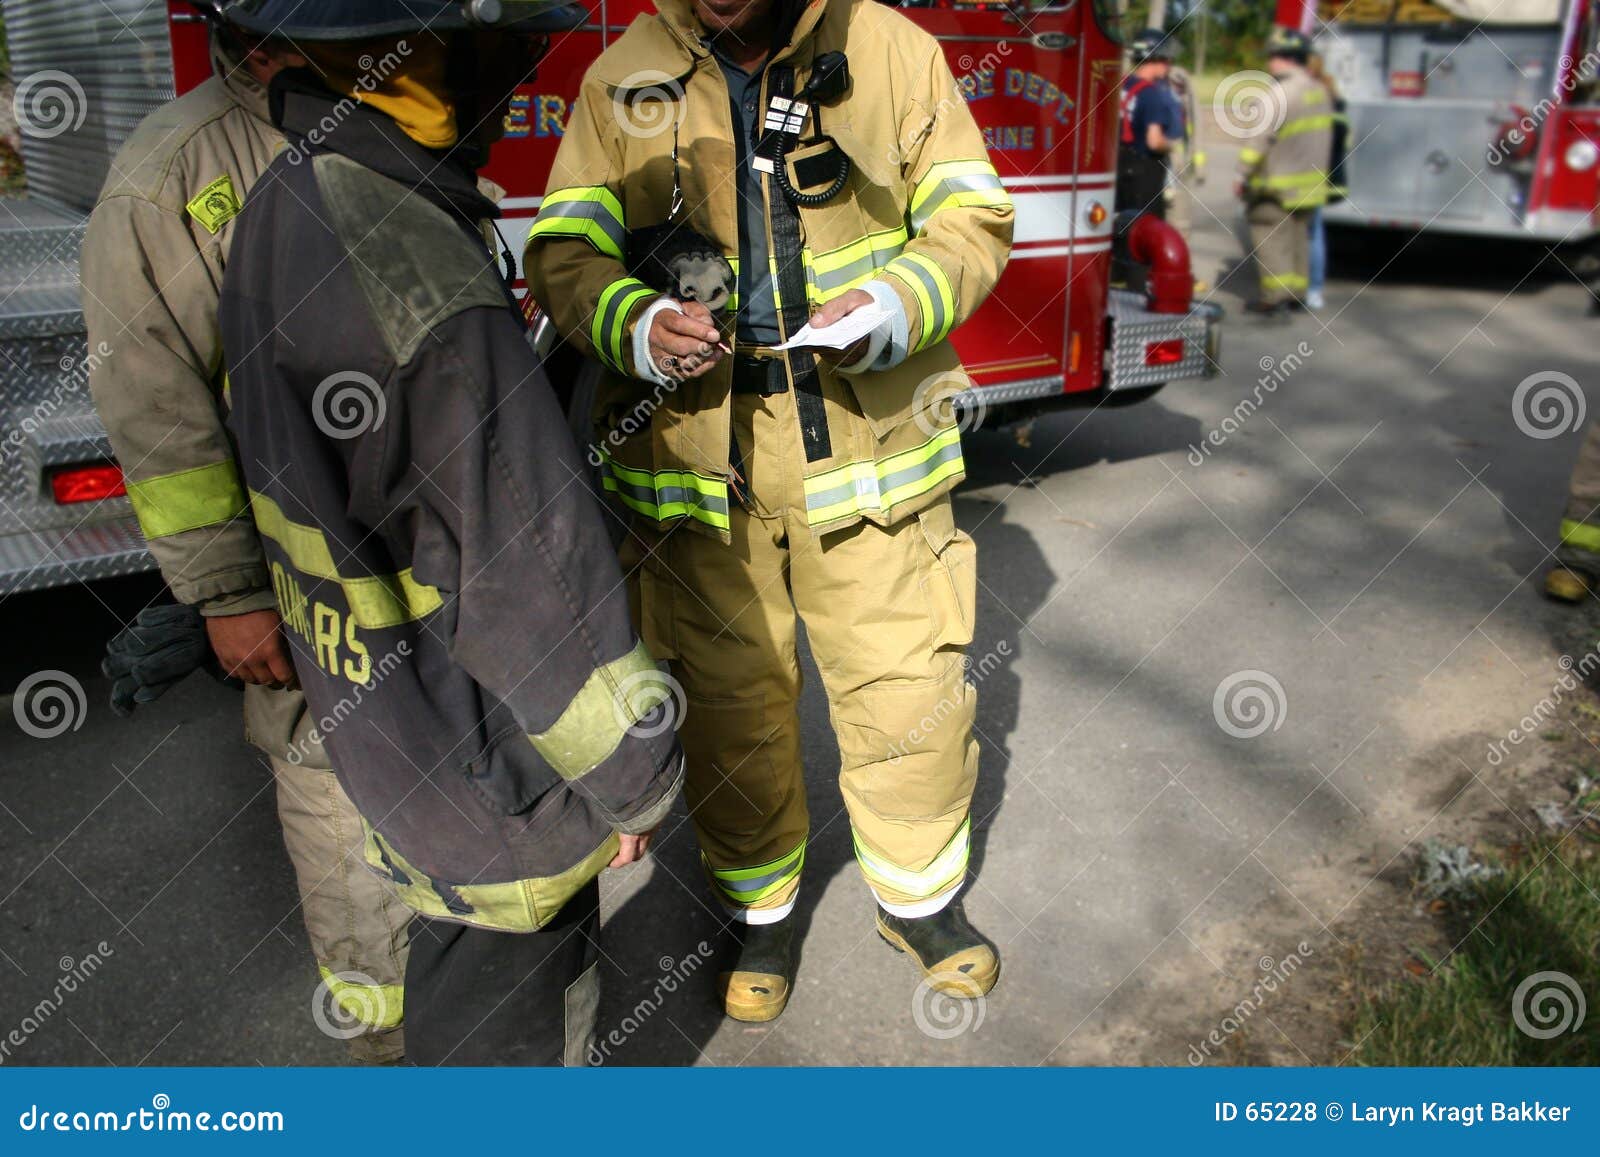 teamwork (firefighters)